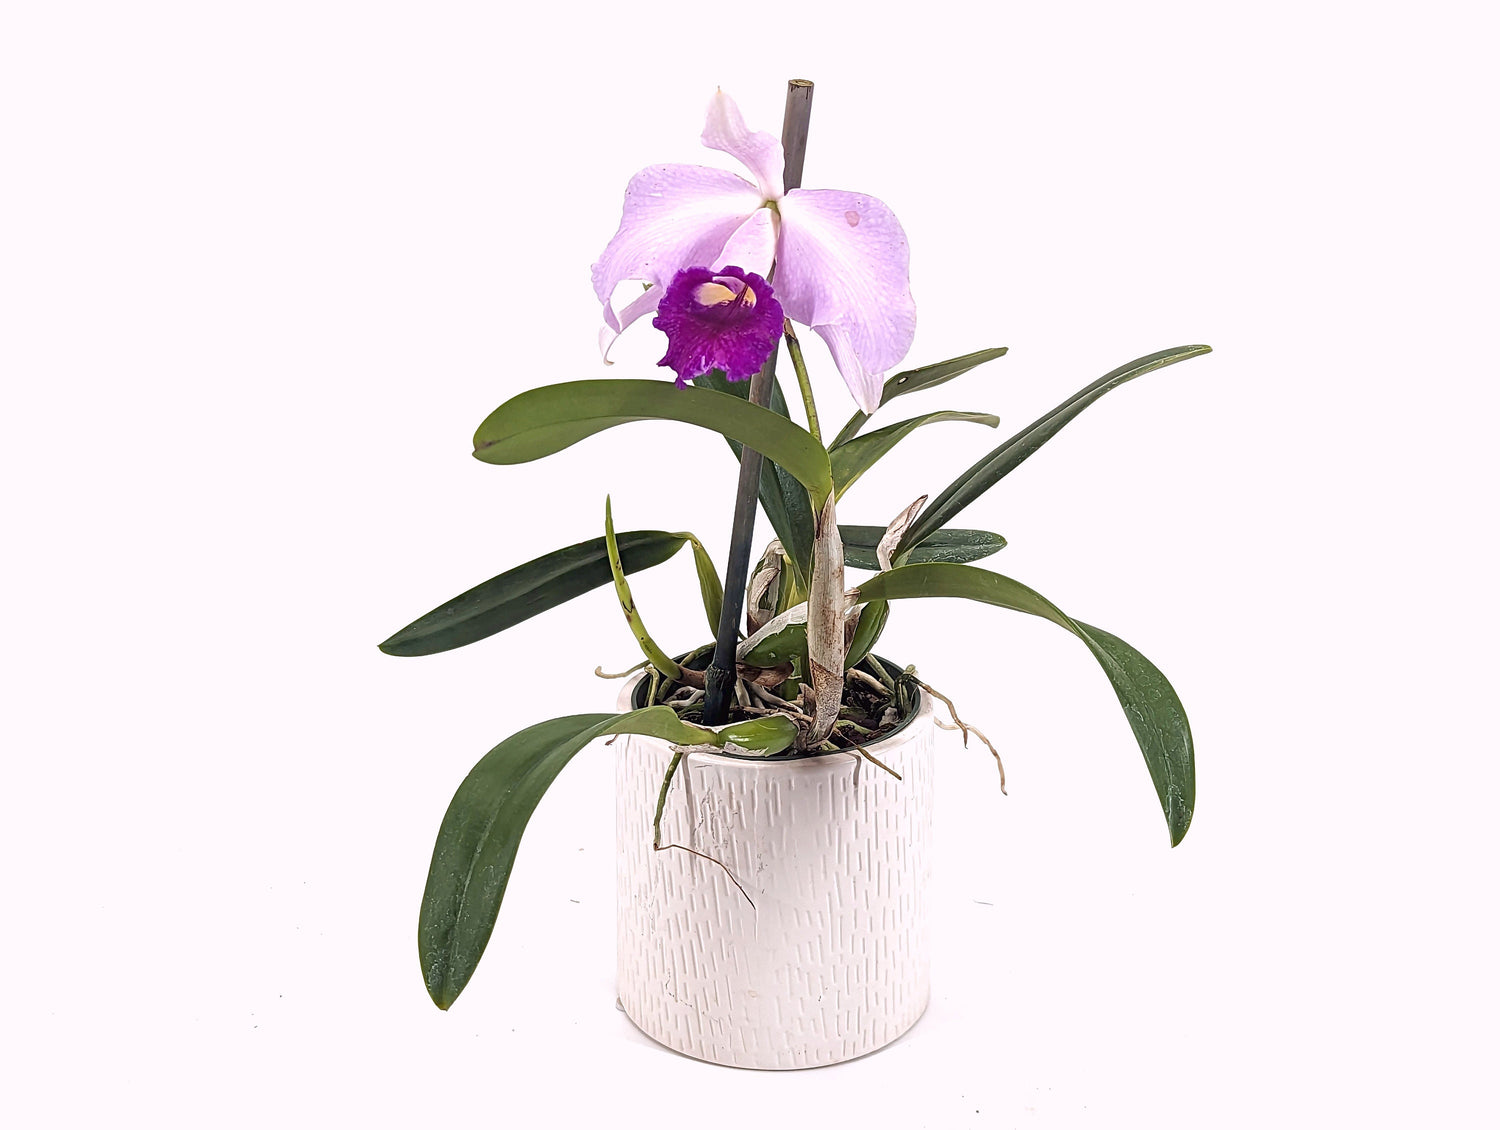 Laeliocattleya Susana x Speciosisima hybrid - Rare Orchid